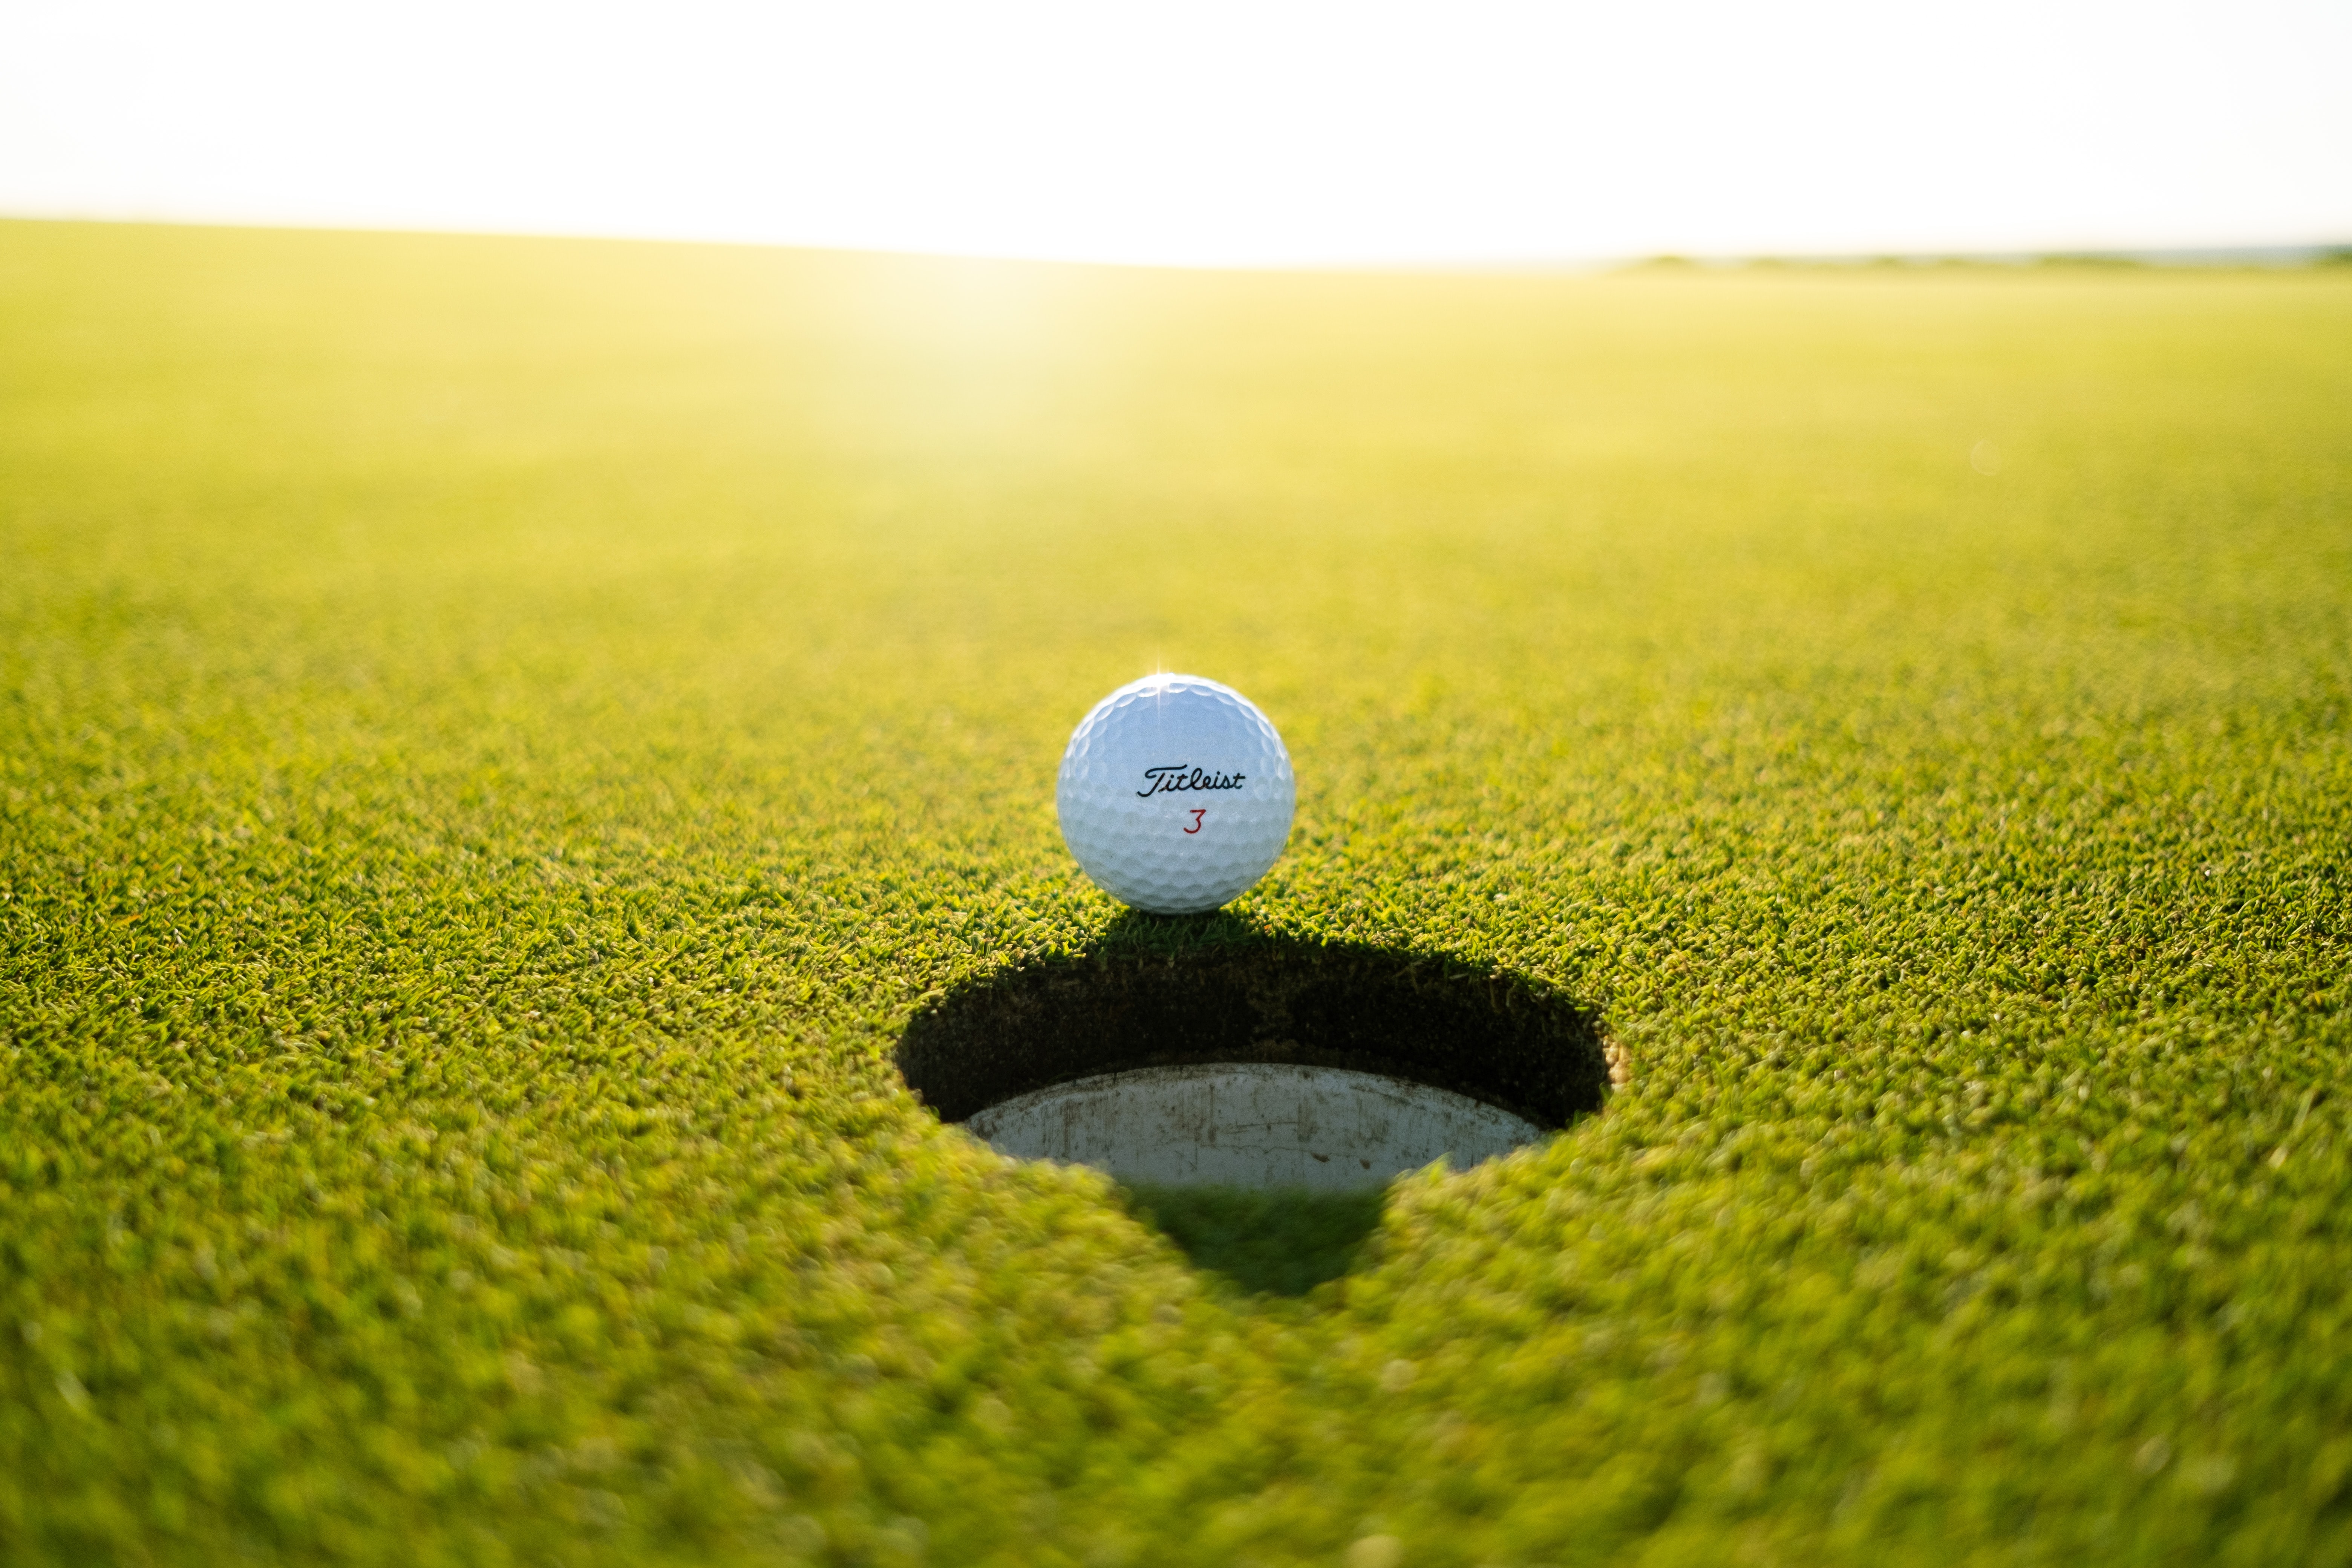 Explore the top 3 golf courses in Newport Beach